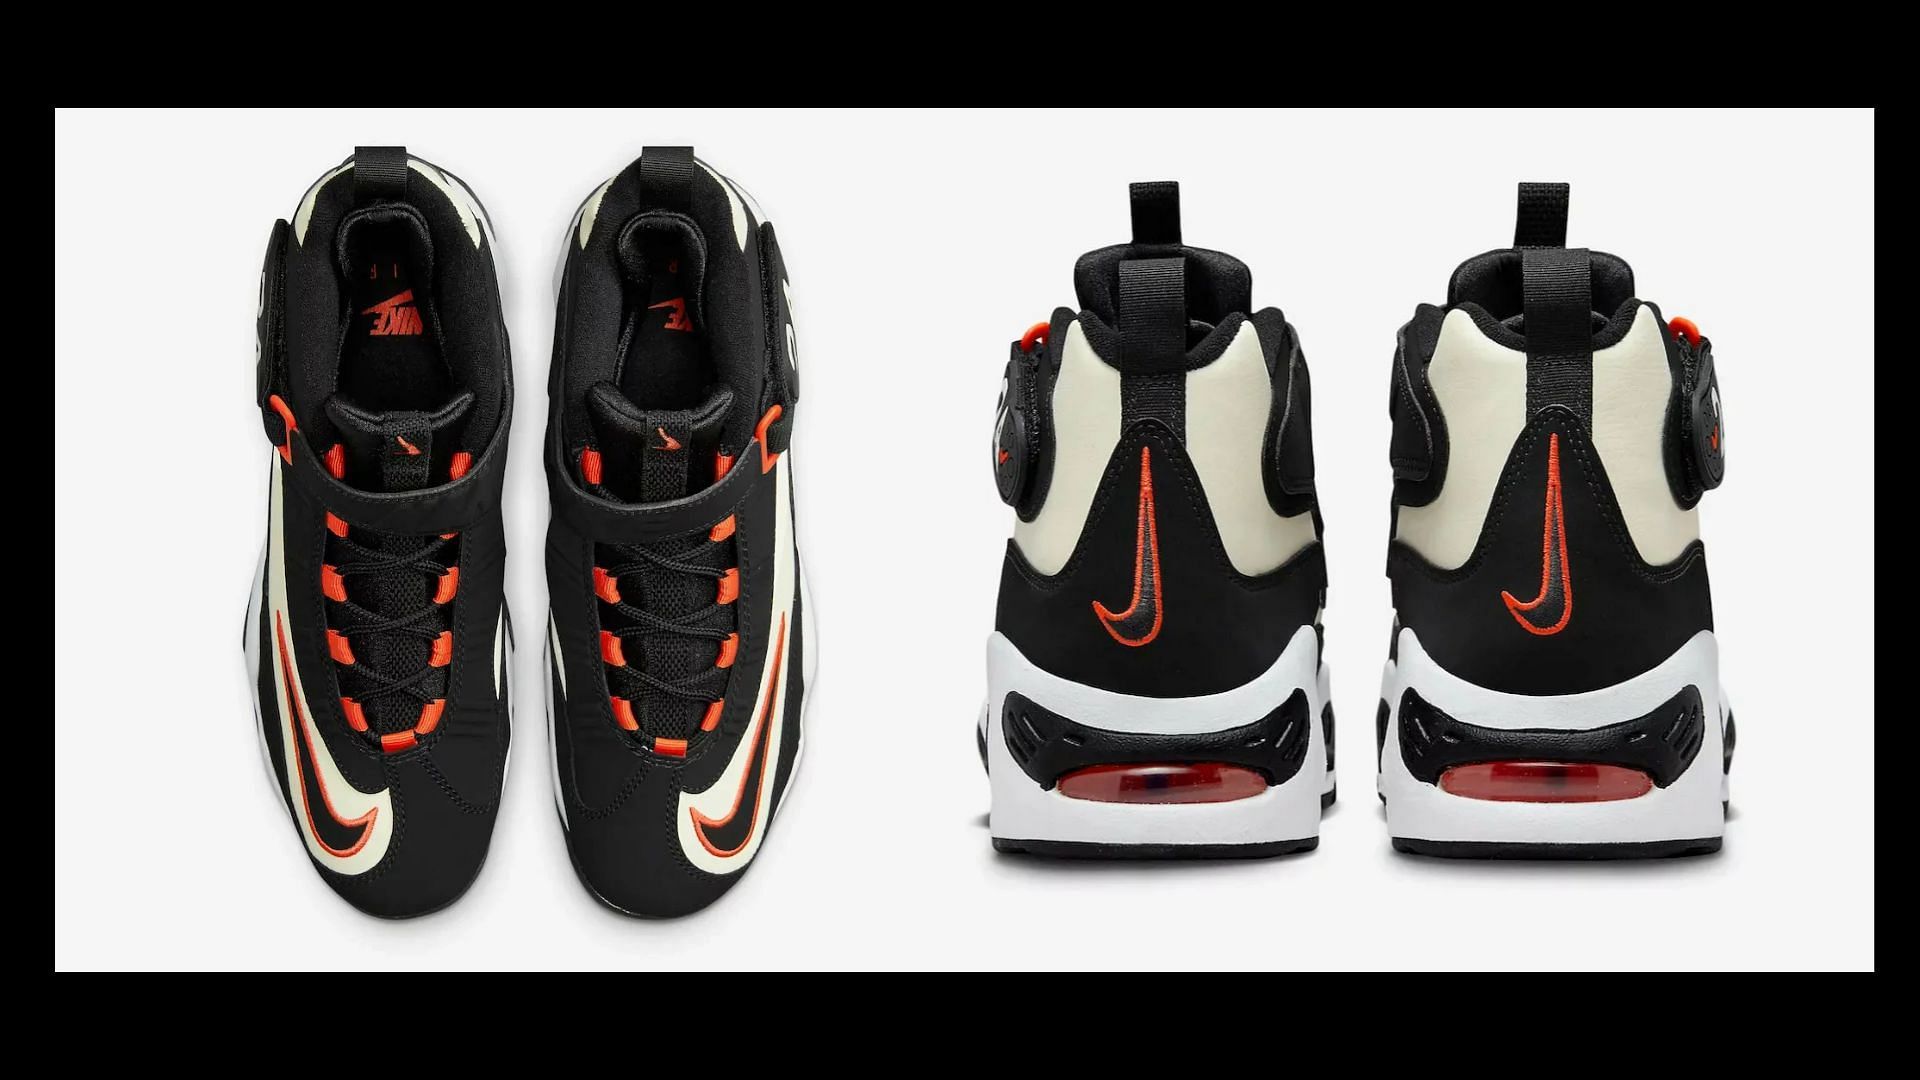 Upcoming Nike Air Griffey Max 1 San Francisco Giants-inspired sneakers (Image via @justfreshkicks / Twitter)